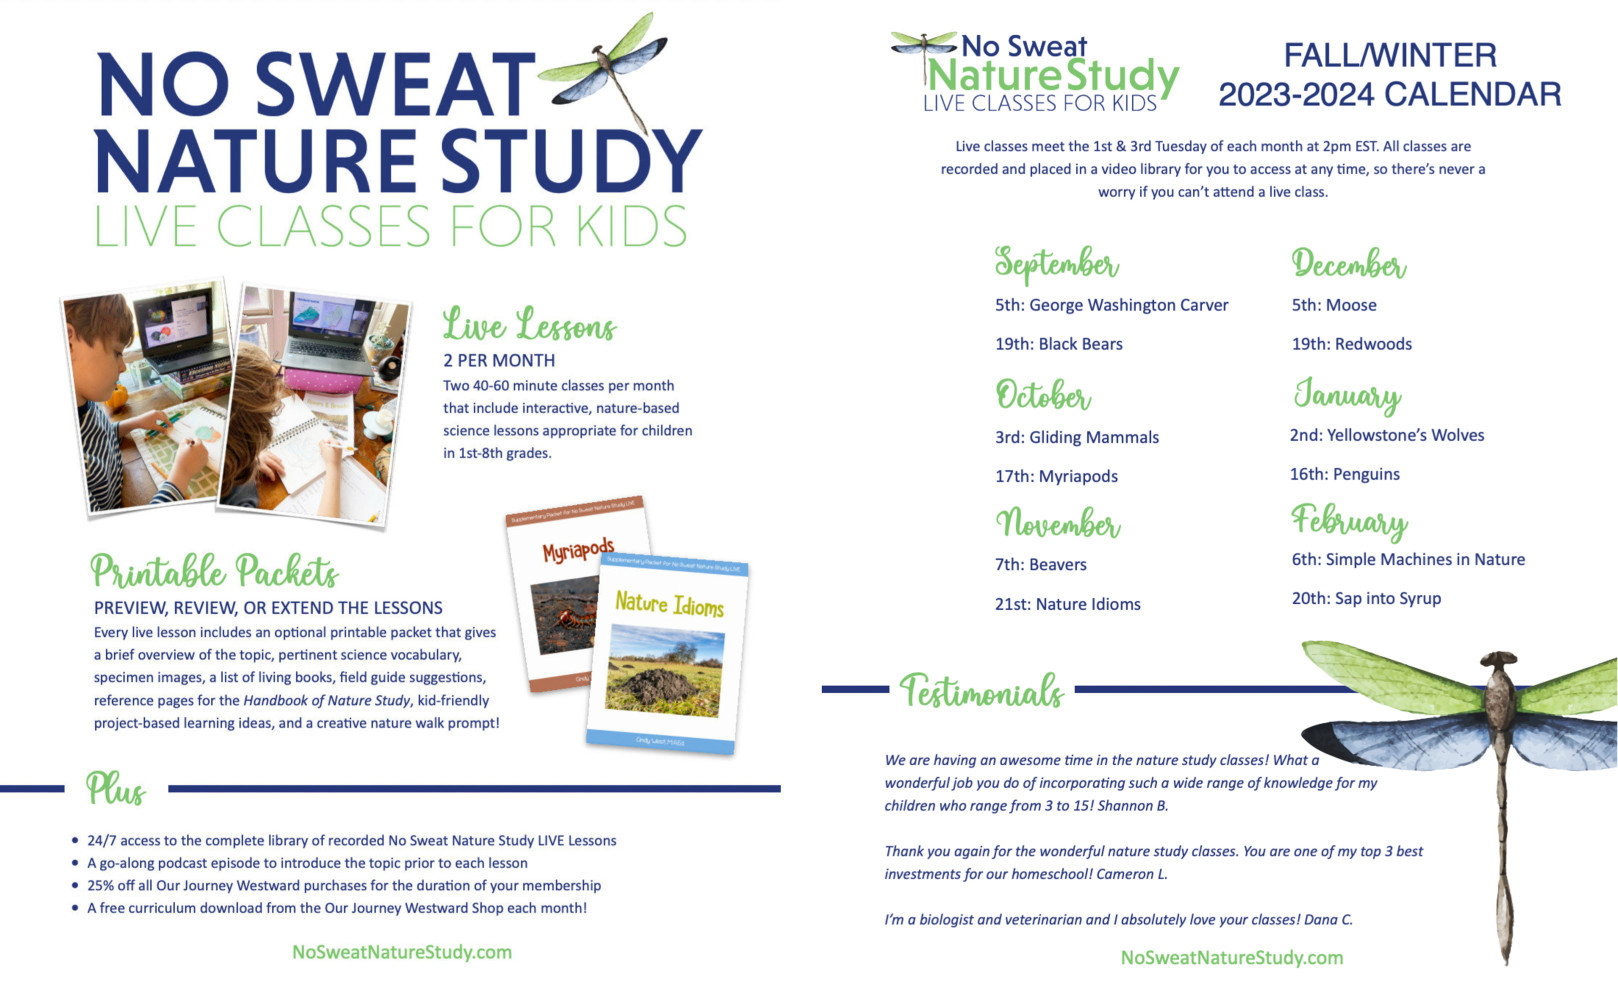 image describing the No Sweat Nature Study program and fall-winter calendar of classes